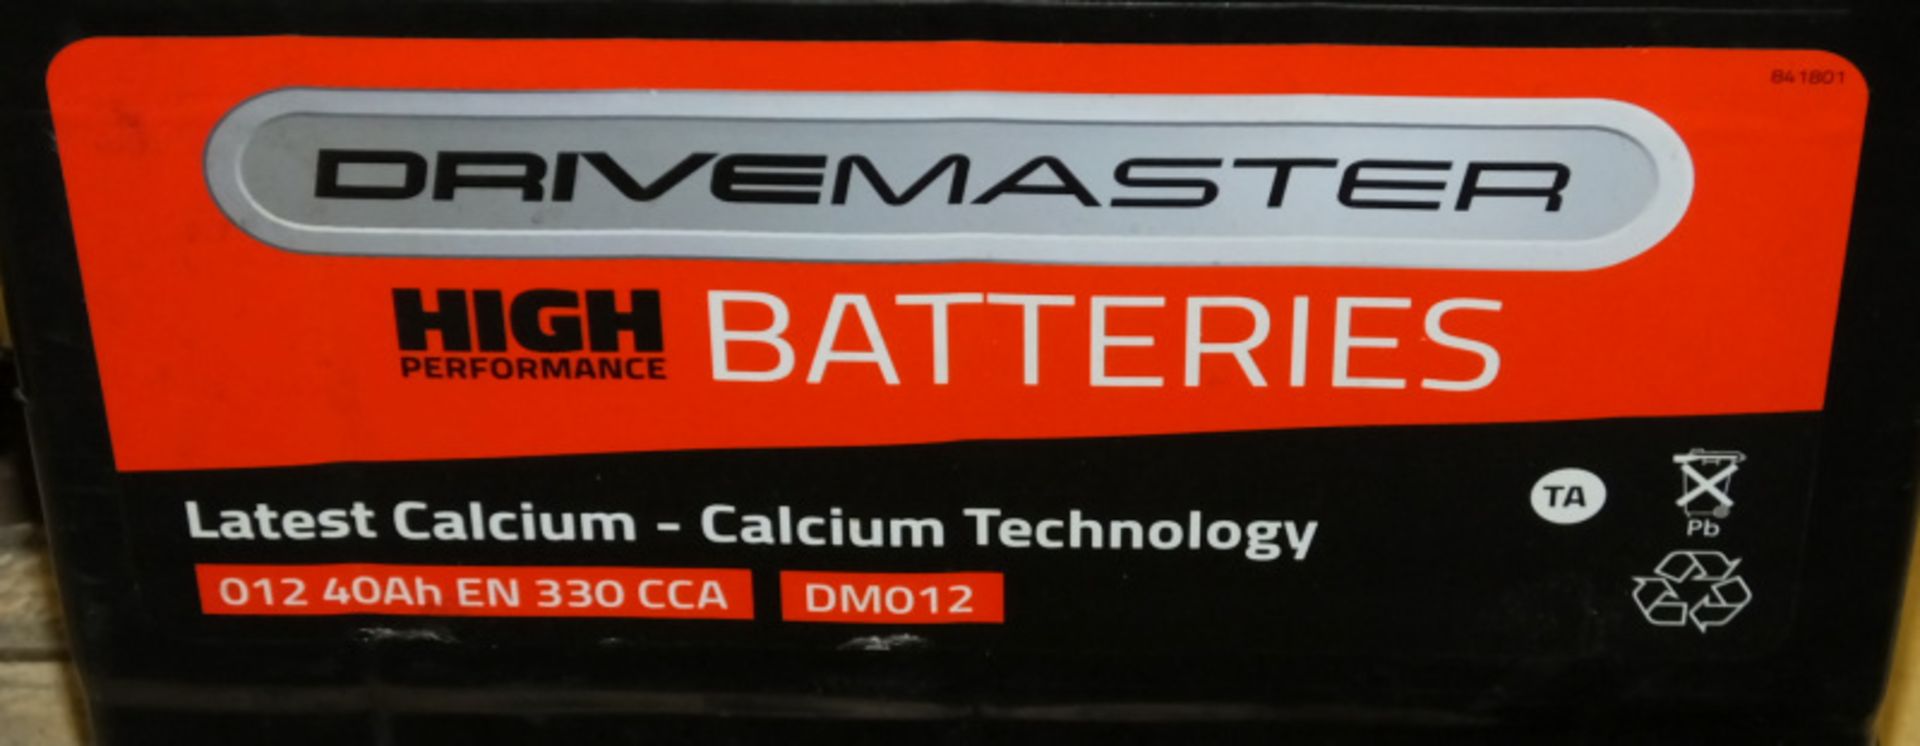 Various Vehicle Batteries - Bosch S3 005, Lion 159 45AH EN330 CCA, Drivemaster 676 Leisure - Image 8 of 12